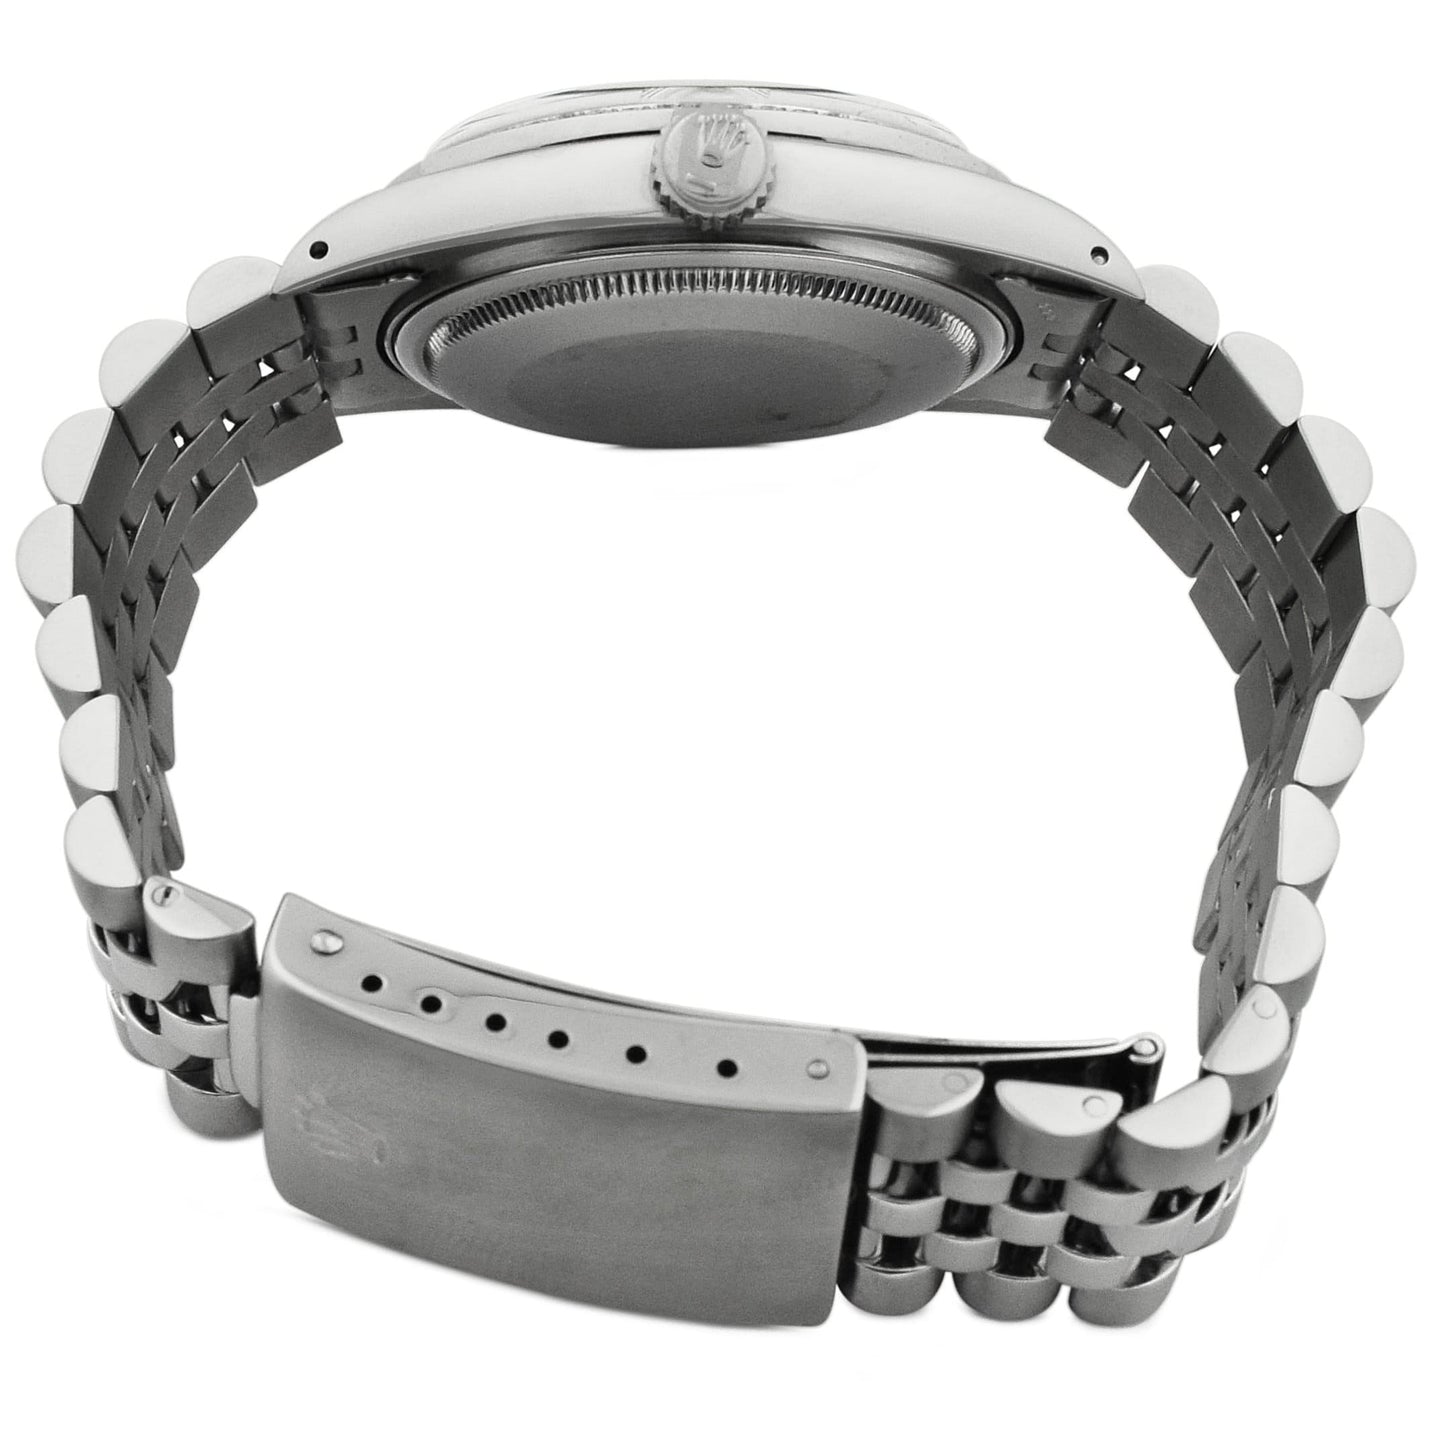 Rolex Datejust Stainless Steel 36mm Factory Diamond Dot Dial Watch Reference# 16014 - Happy Jewelers Fine Jewelry Lifetime Warranty